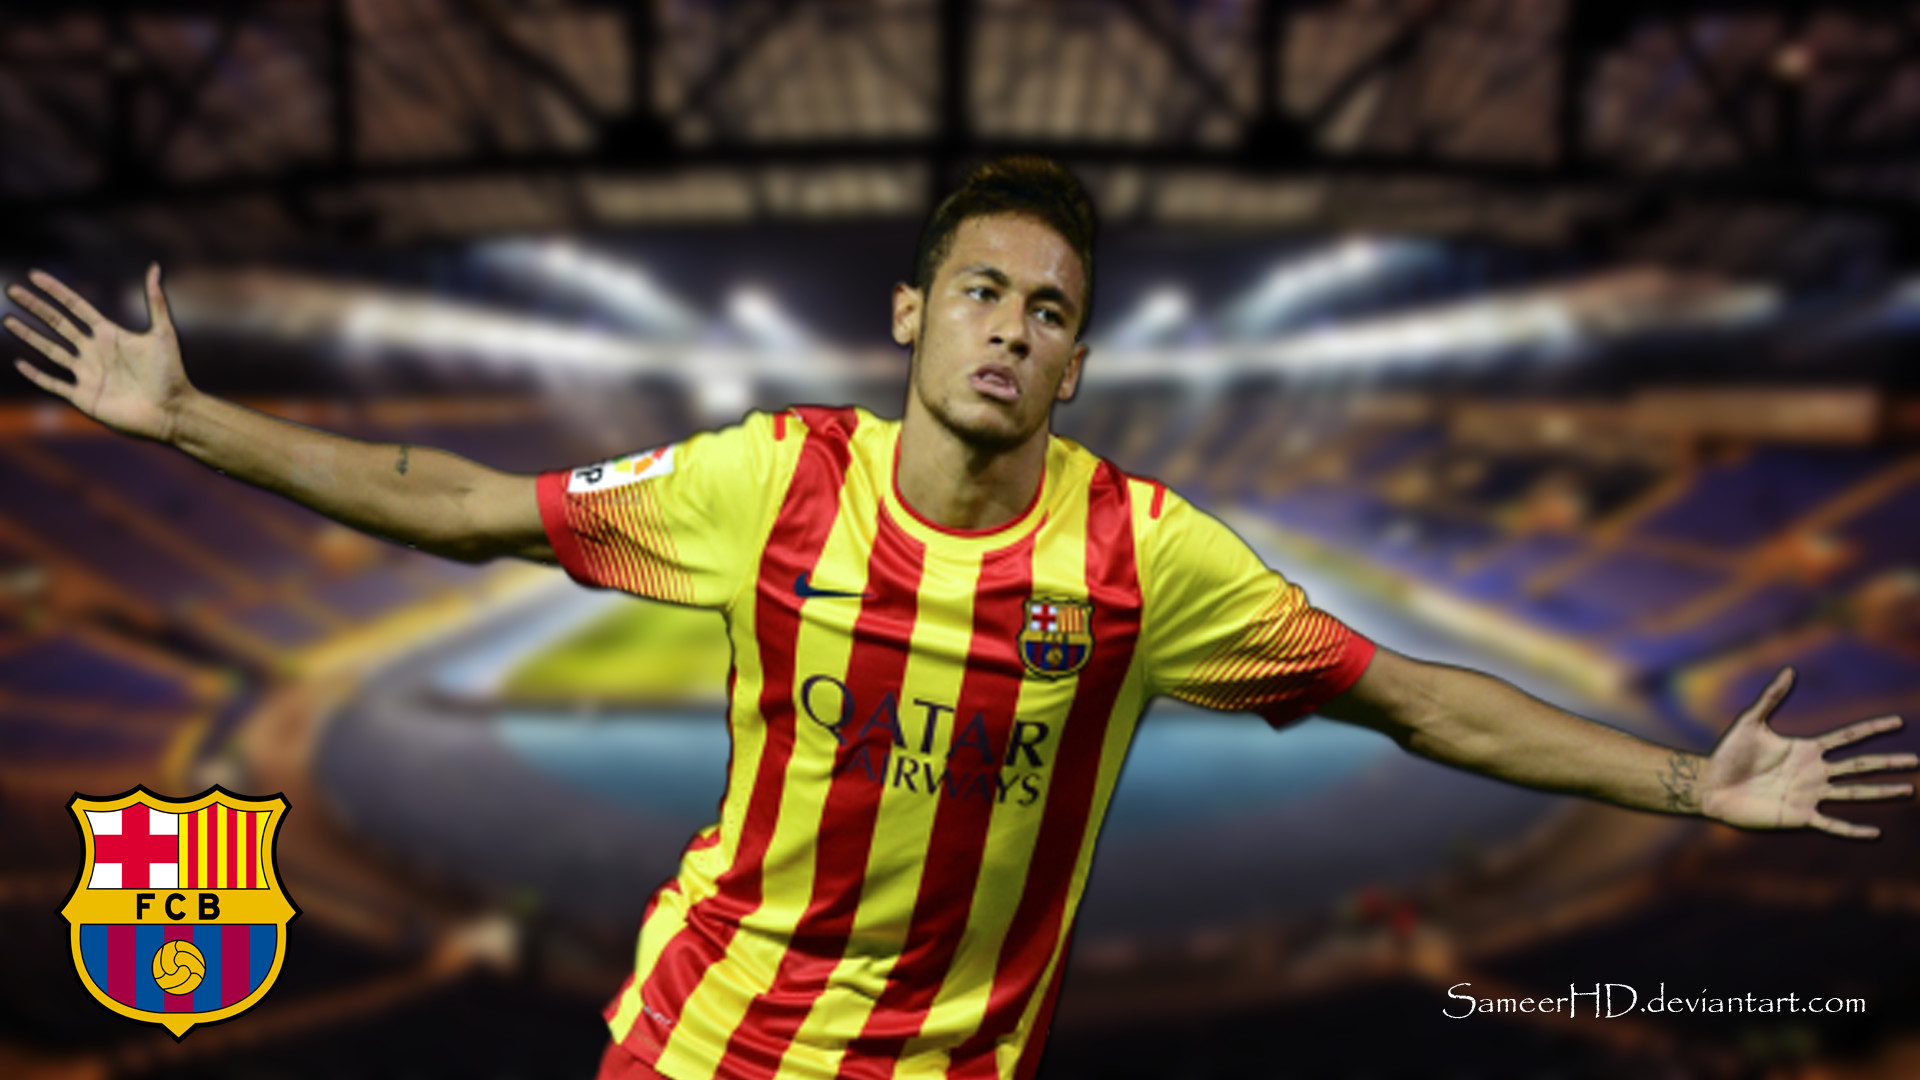 1920x1080 pardocomics 1 0 FC Barcelona Neymar Jr Wallpaper by SameerHD